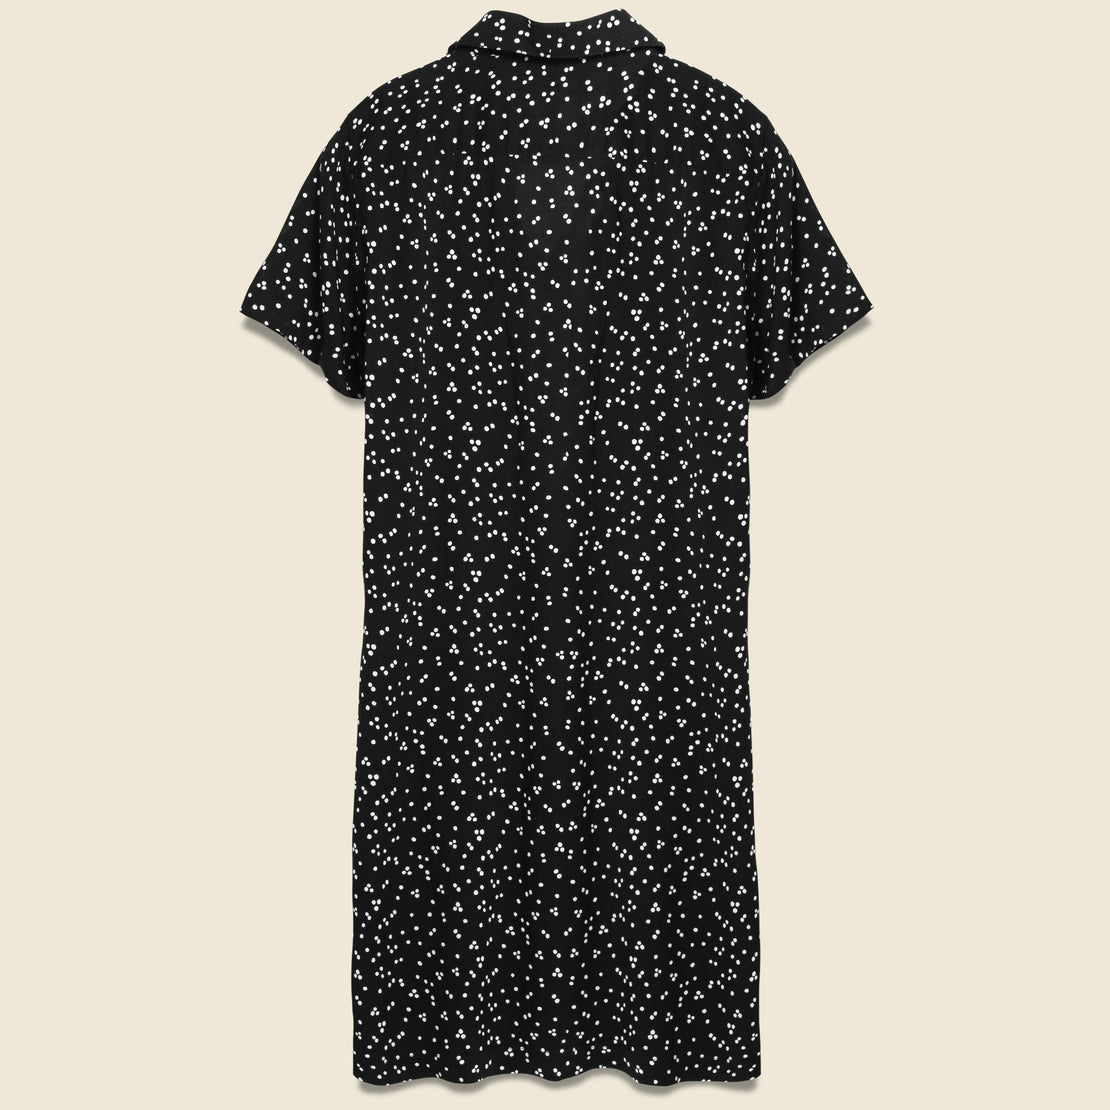 Frances Dress - Black Dot - Bridge & Burn - STAG Provisions - W - Onepiece - Dress